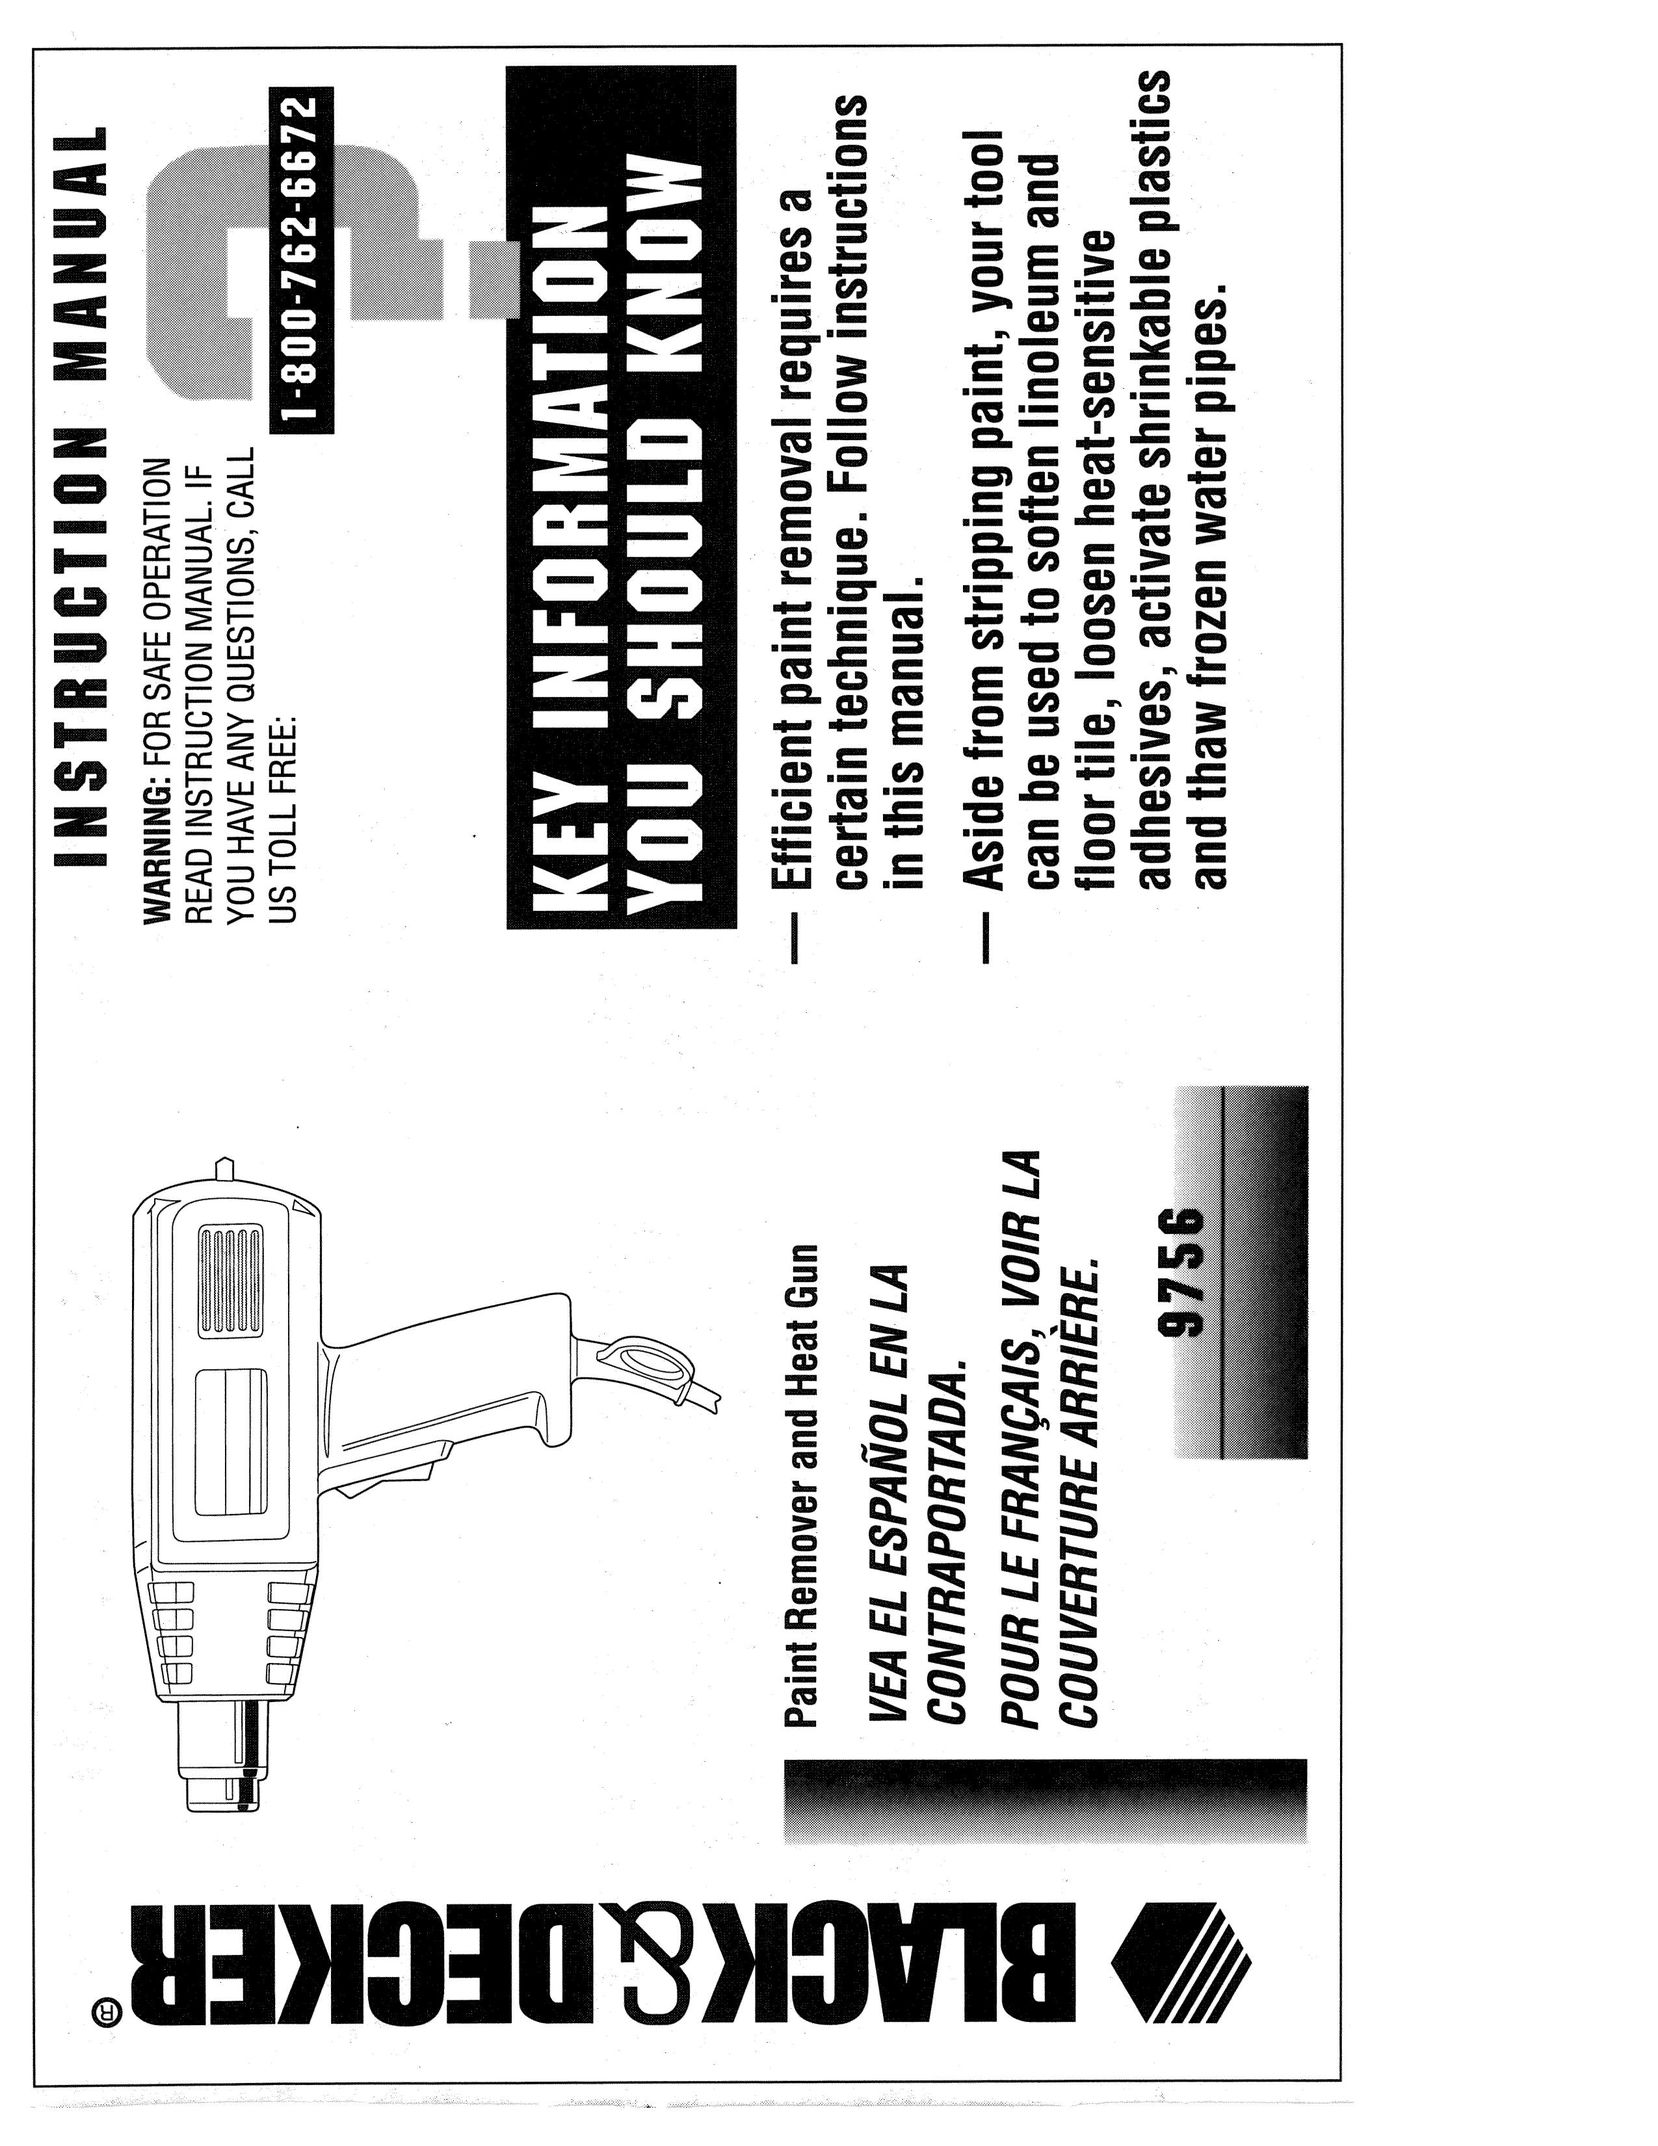 Black & Decker 9756 Cordless Drill User Manual